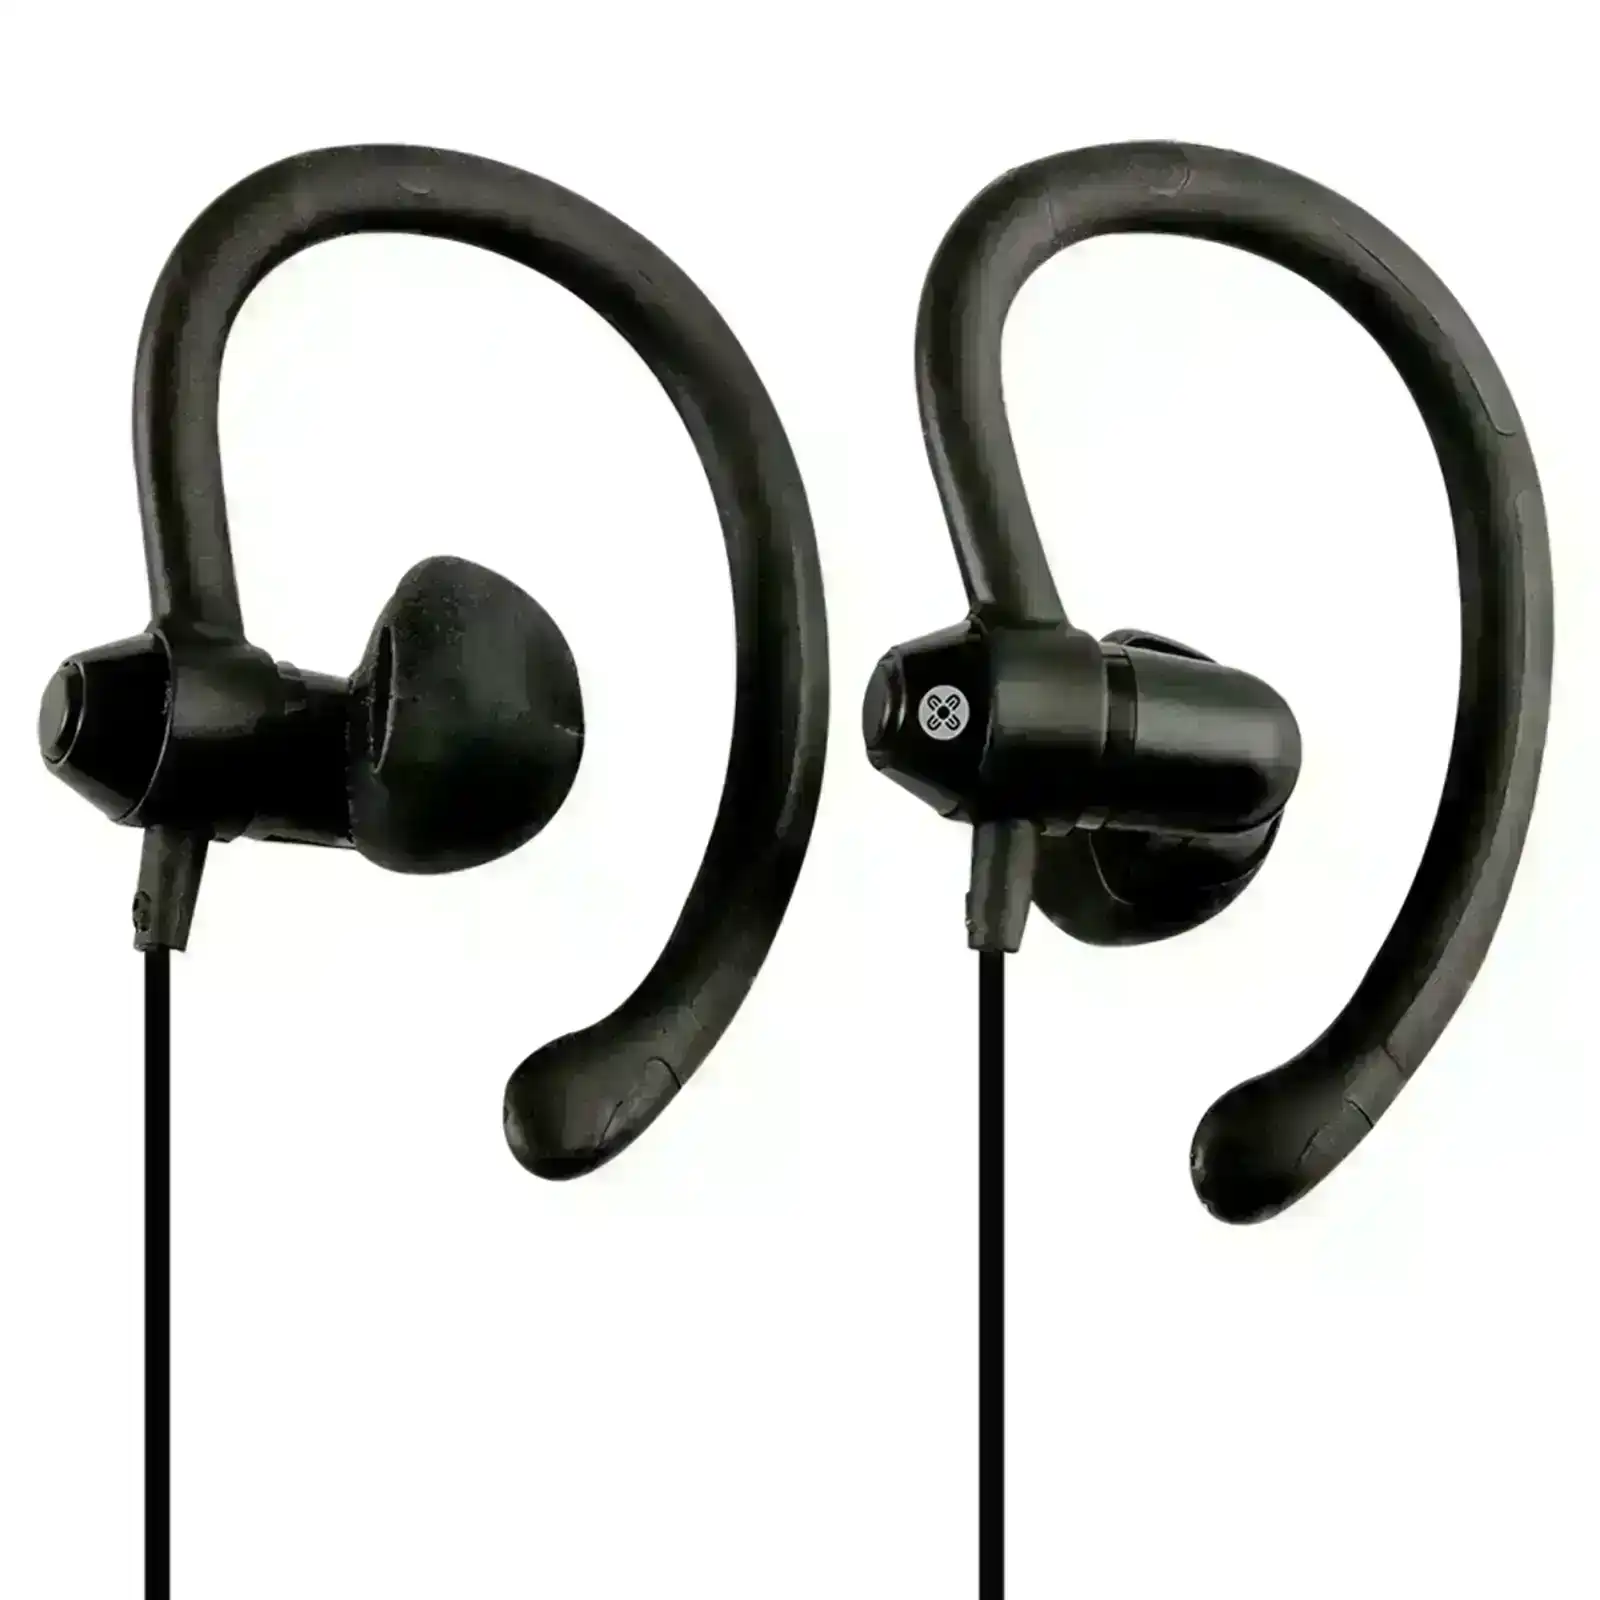 Moki Headphones 90 Degree Sports 3.5mm Earphones w/ Ear Hooks for iPhone/Android